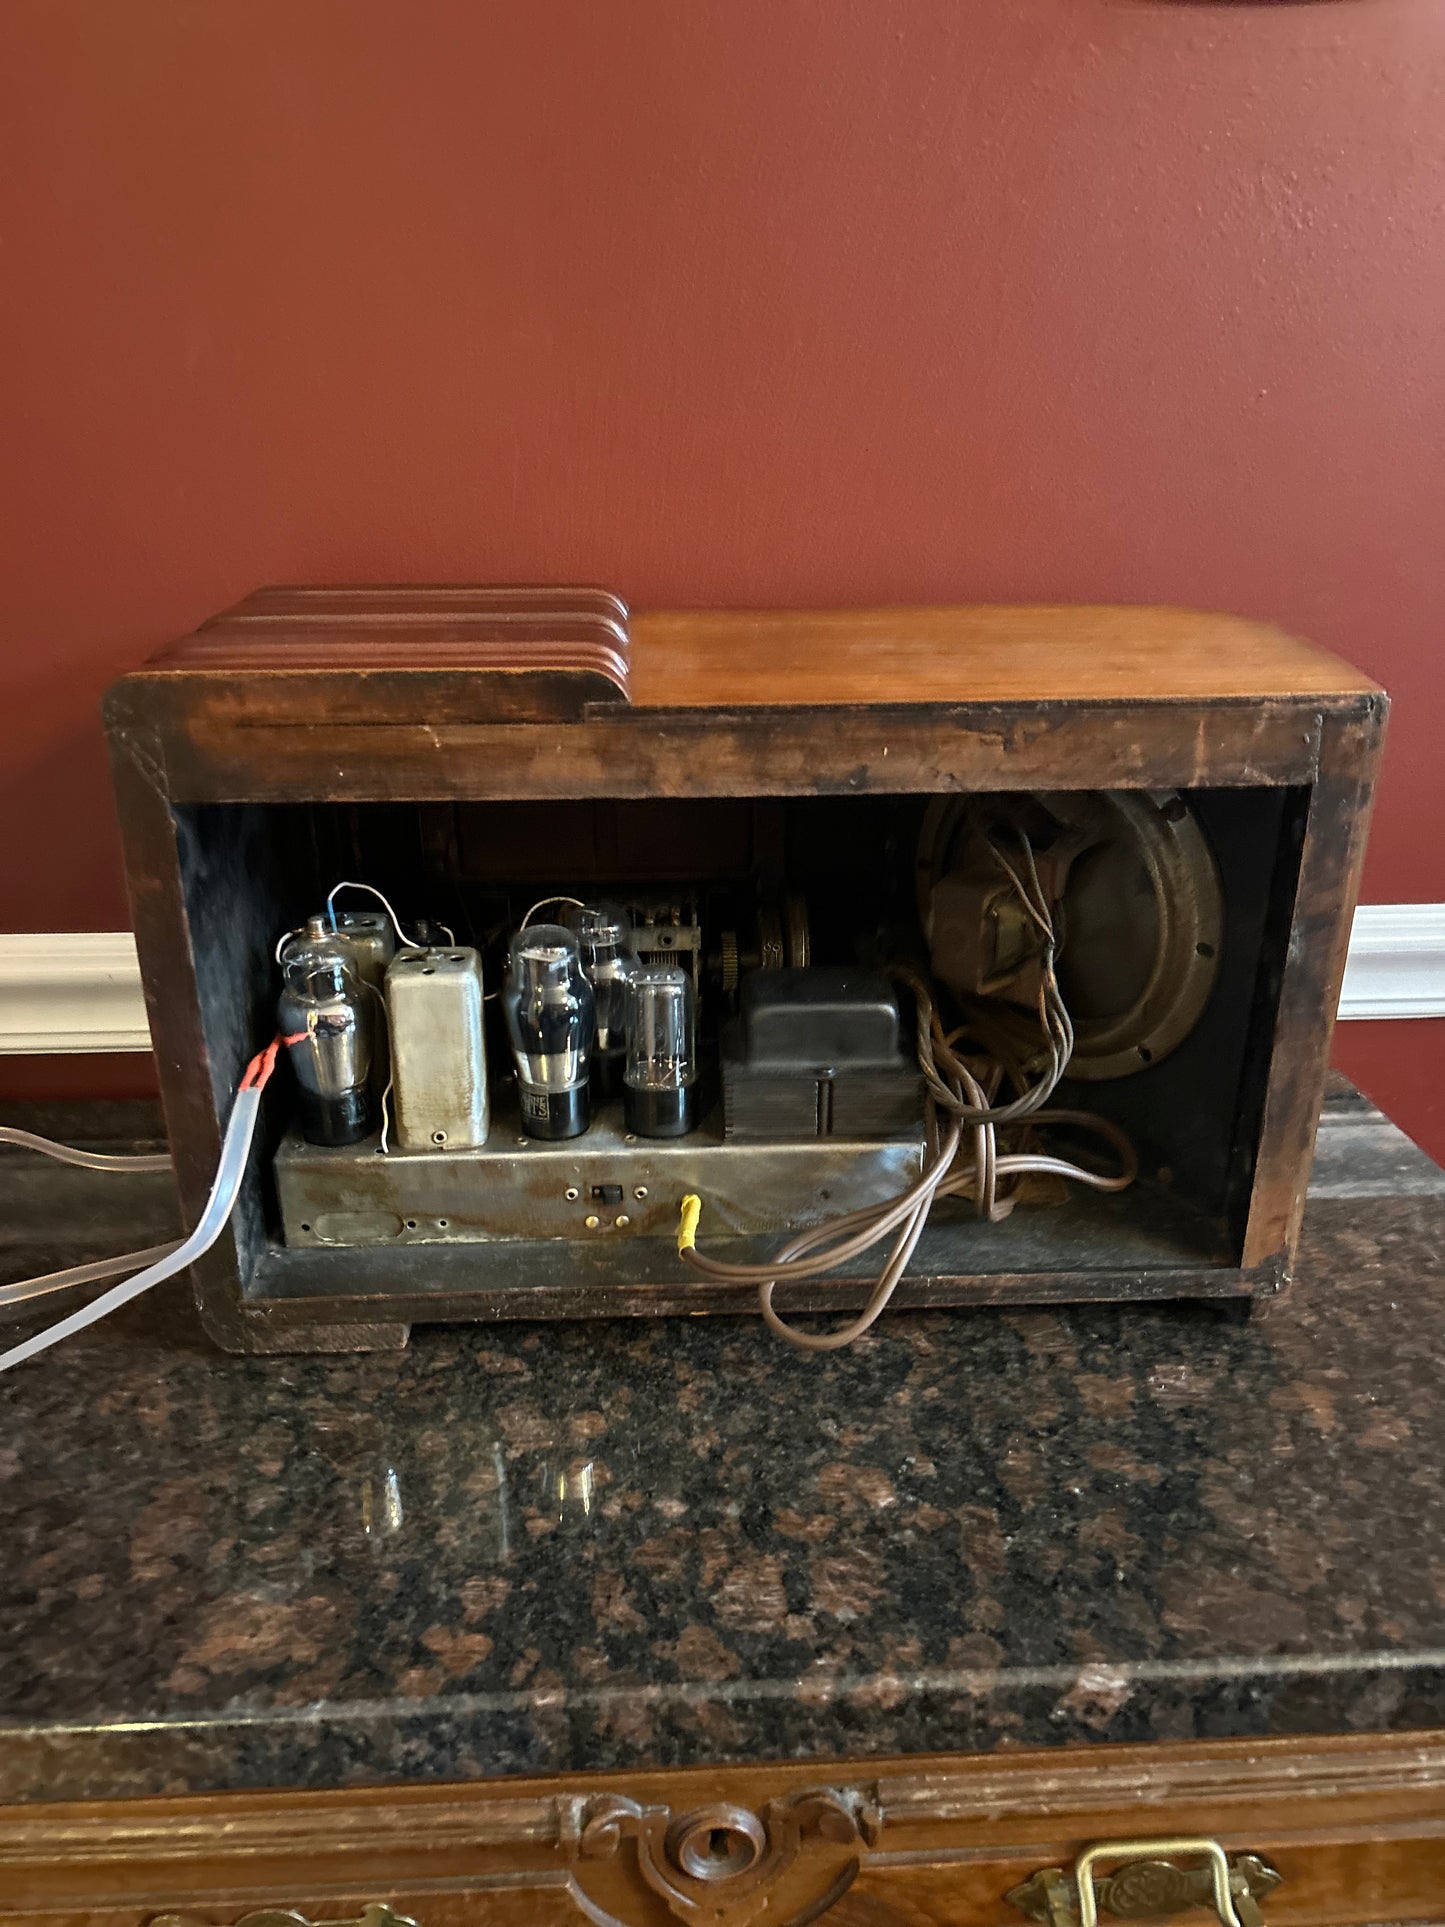 Firestone Air Chief Radio  R-313-A (1939)(wood tube table radio)